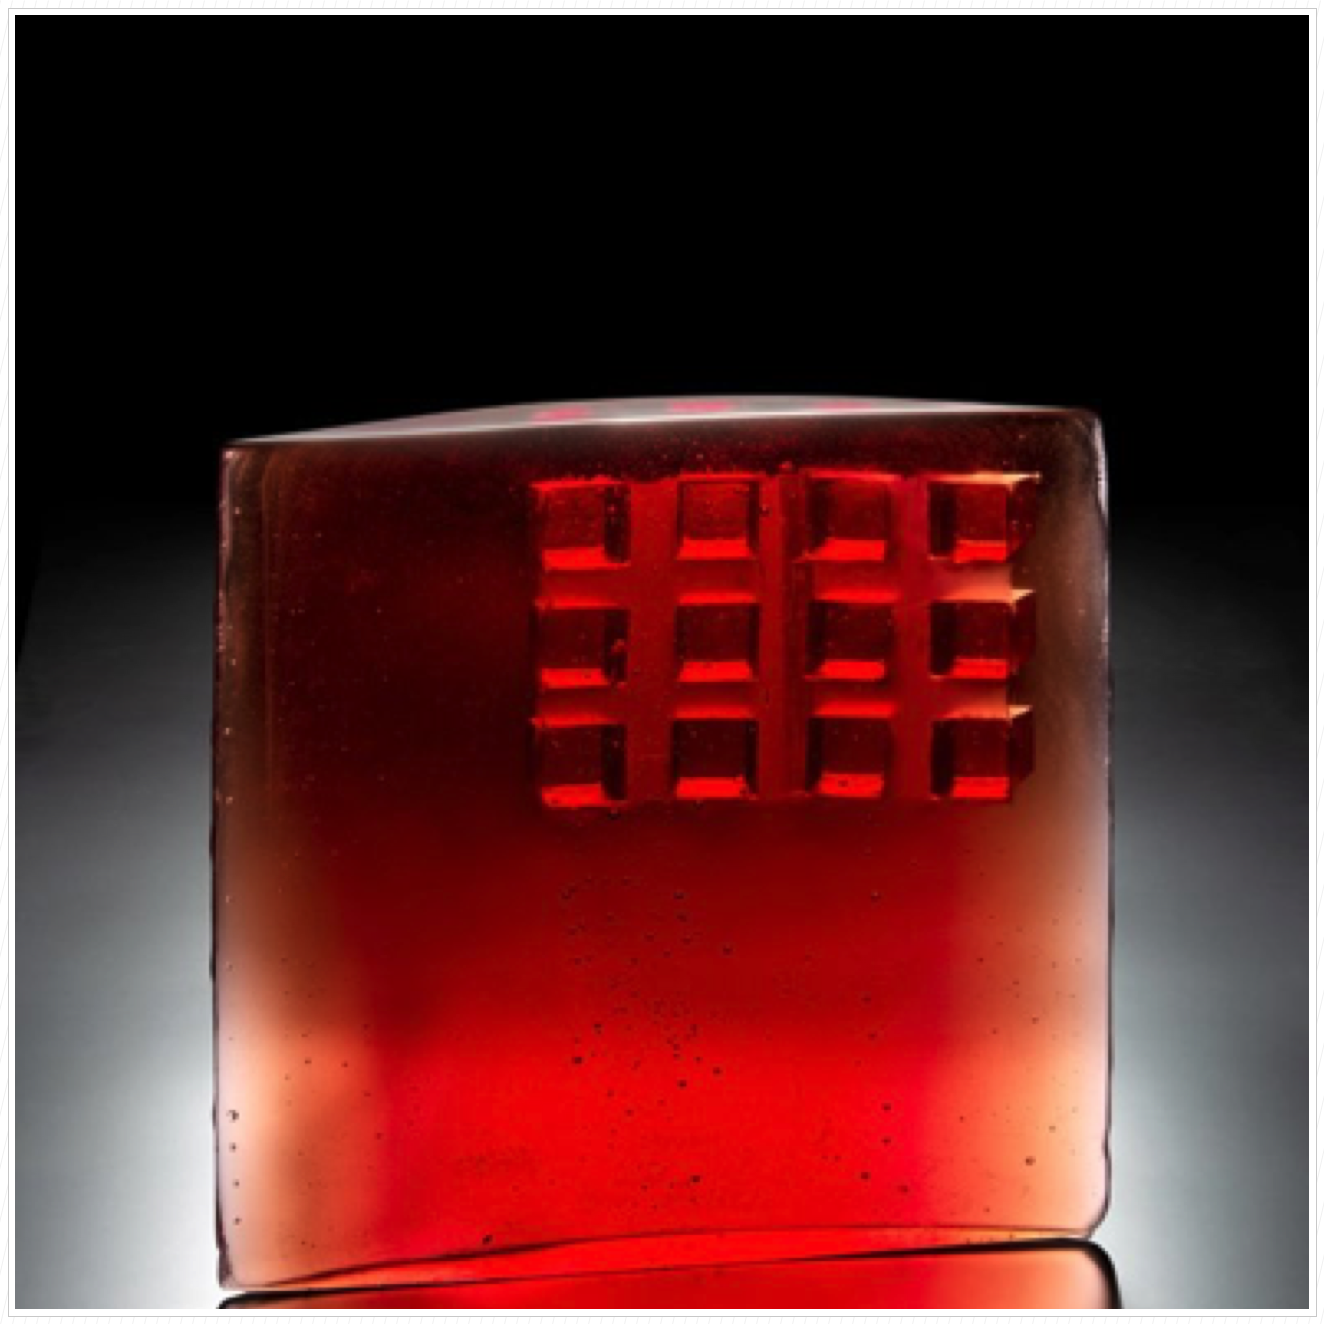 12 Cubes On Mars
2019
Cast Didymium Glass 
24 x 24 x 6 in.
$25,000